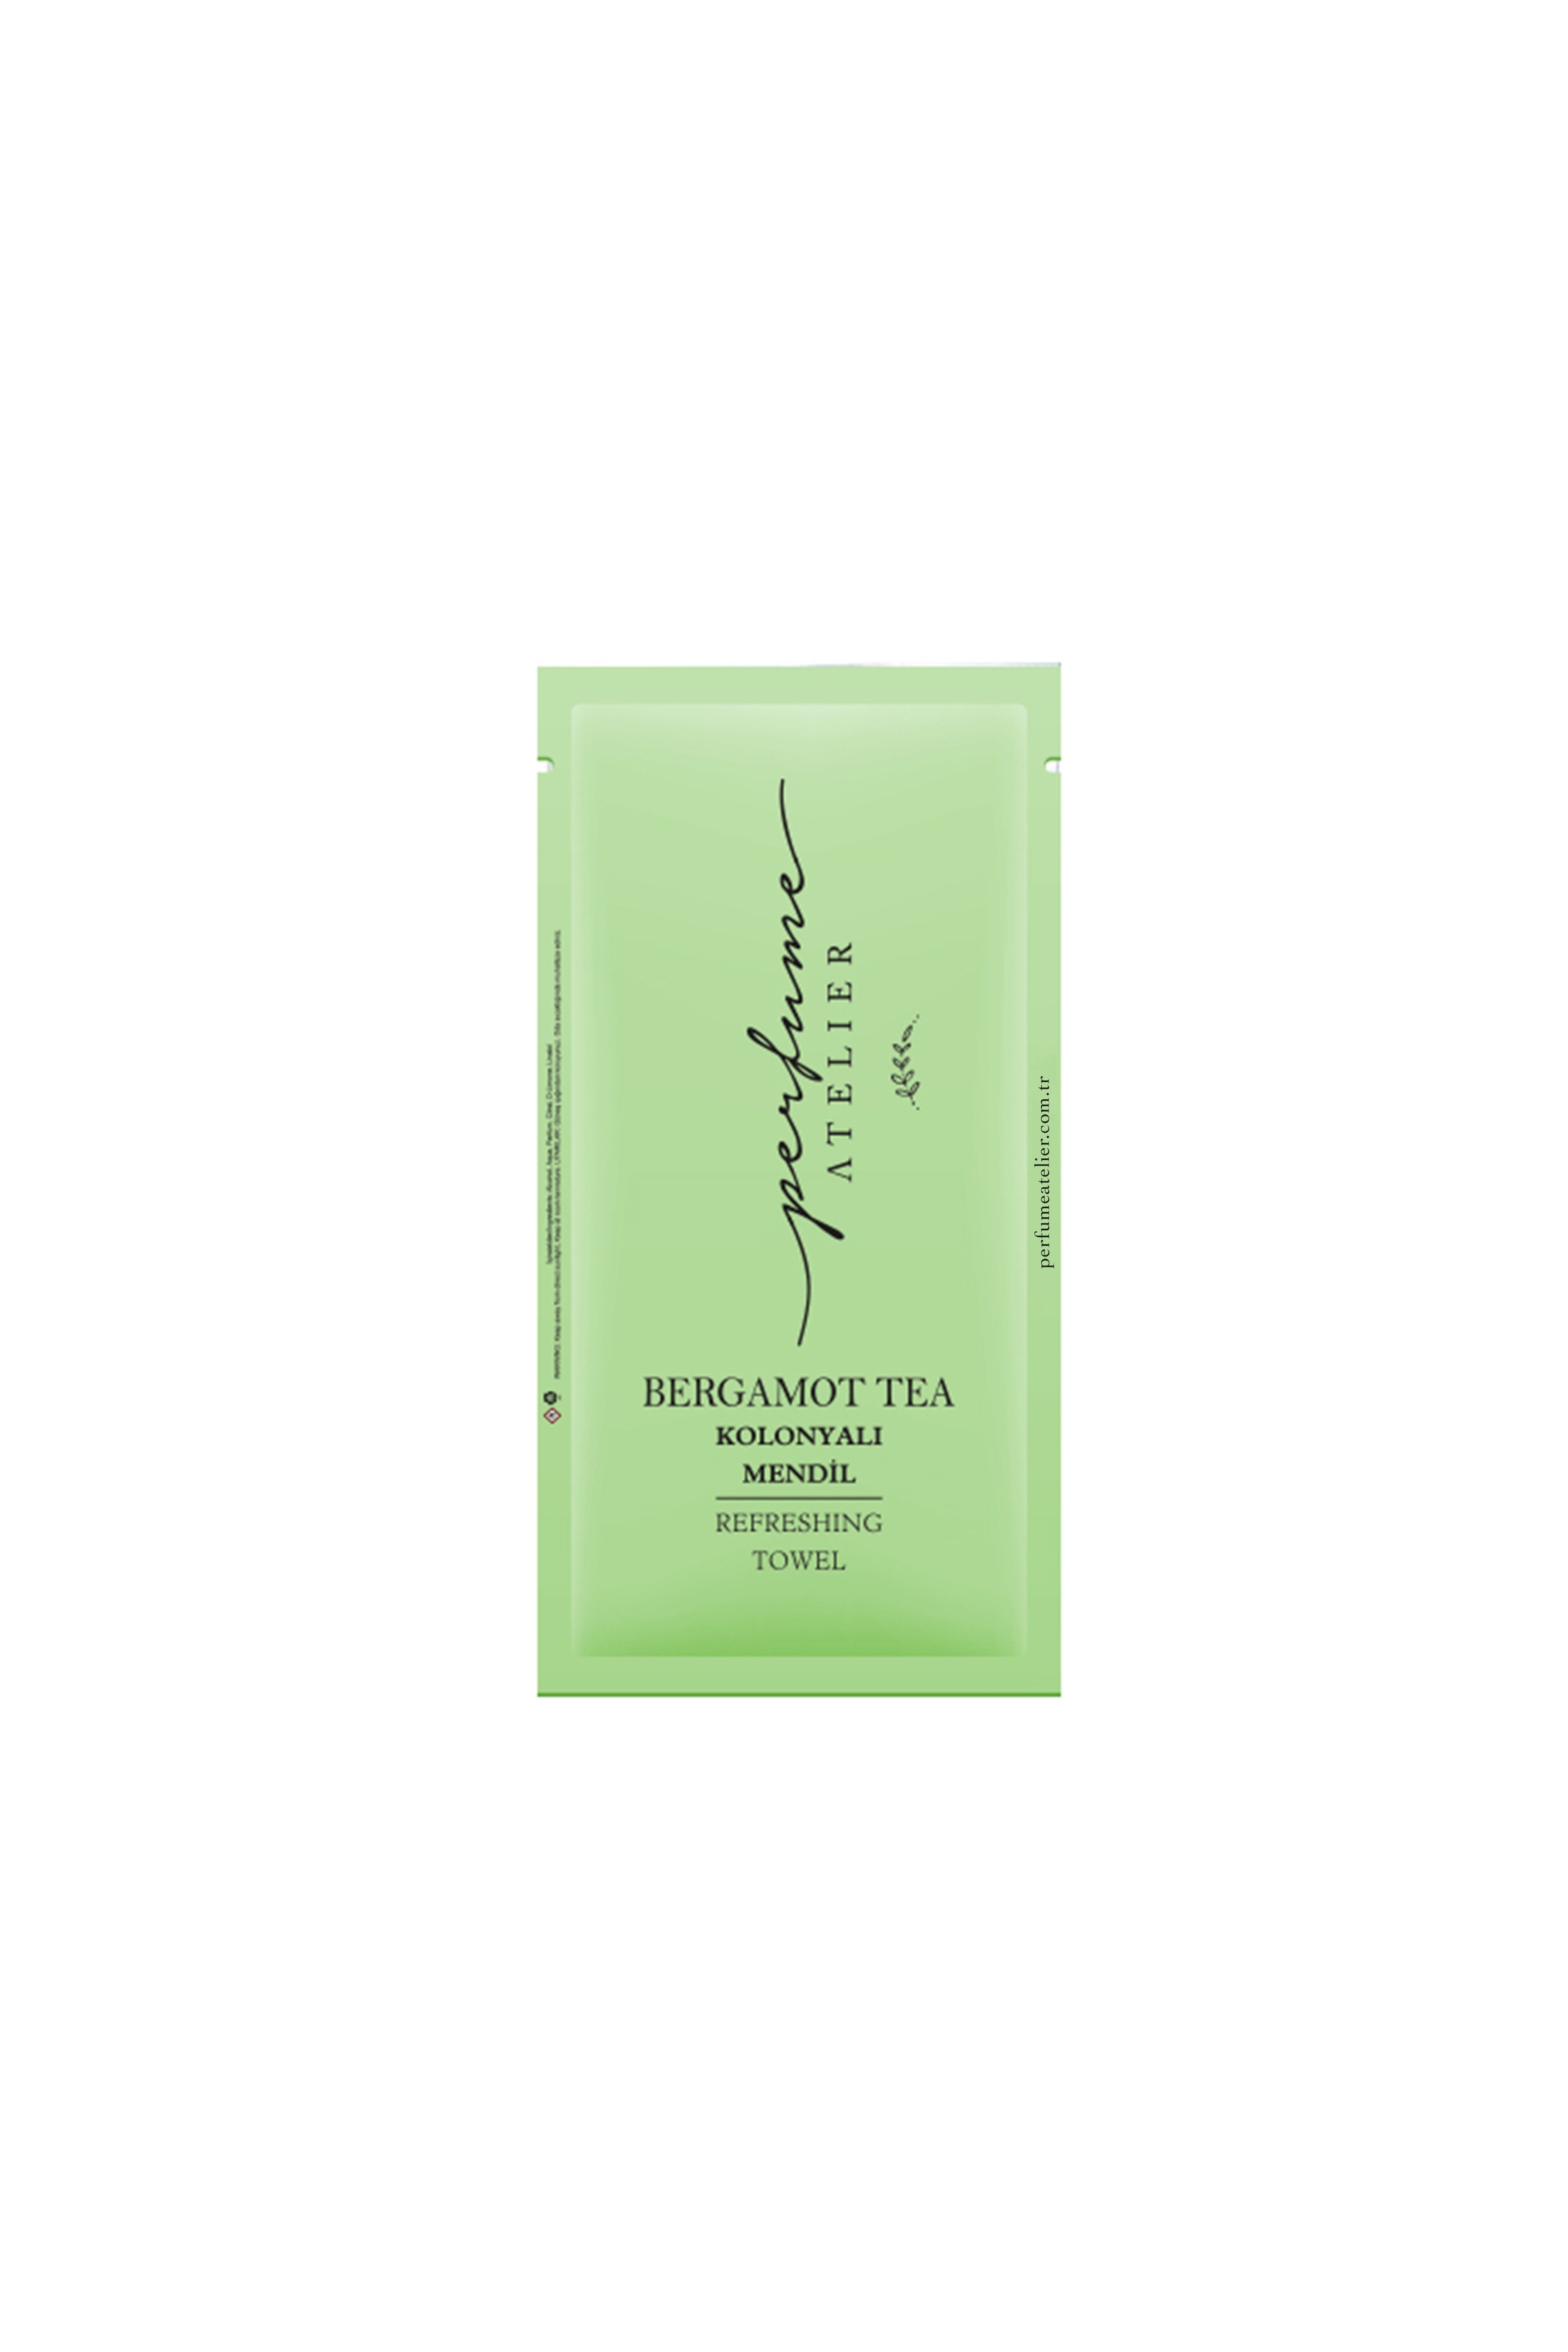  Bergamot Tea 100's  Refreshing Towels image